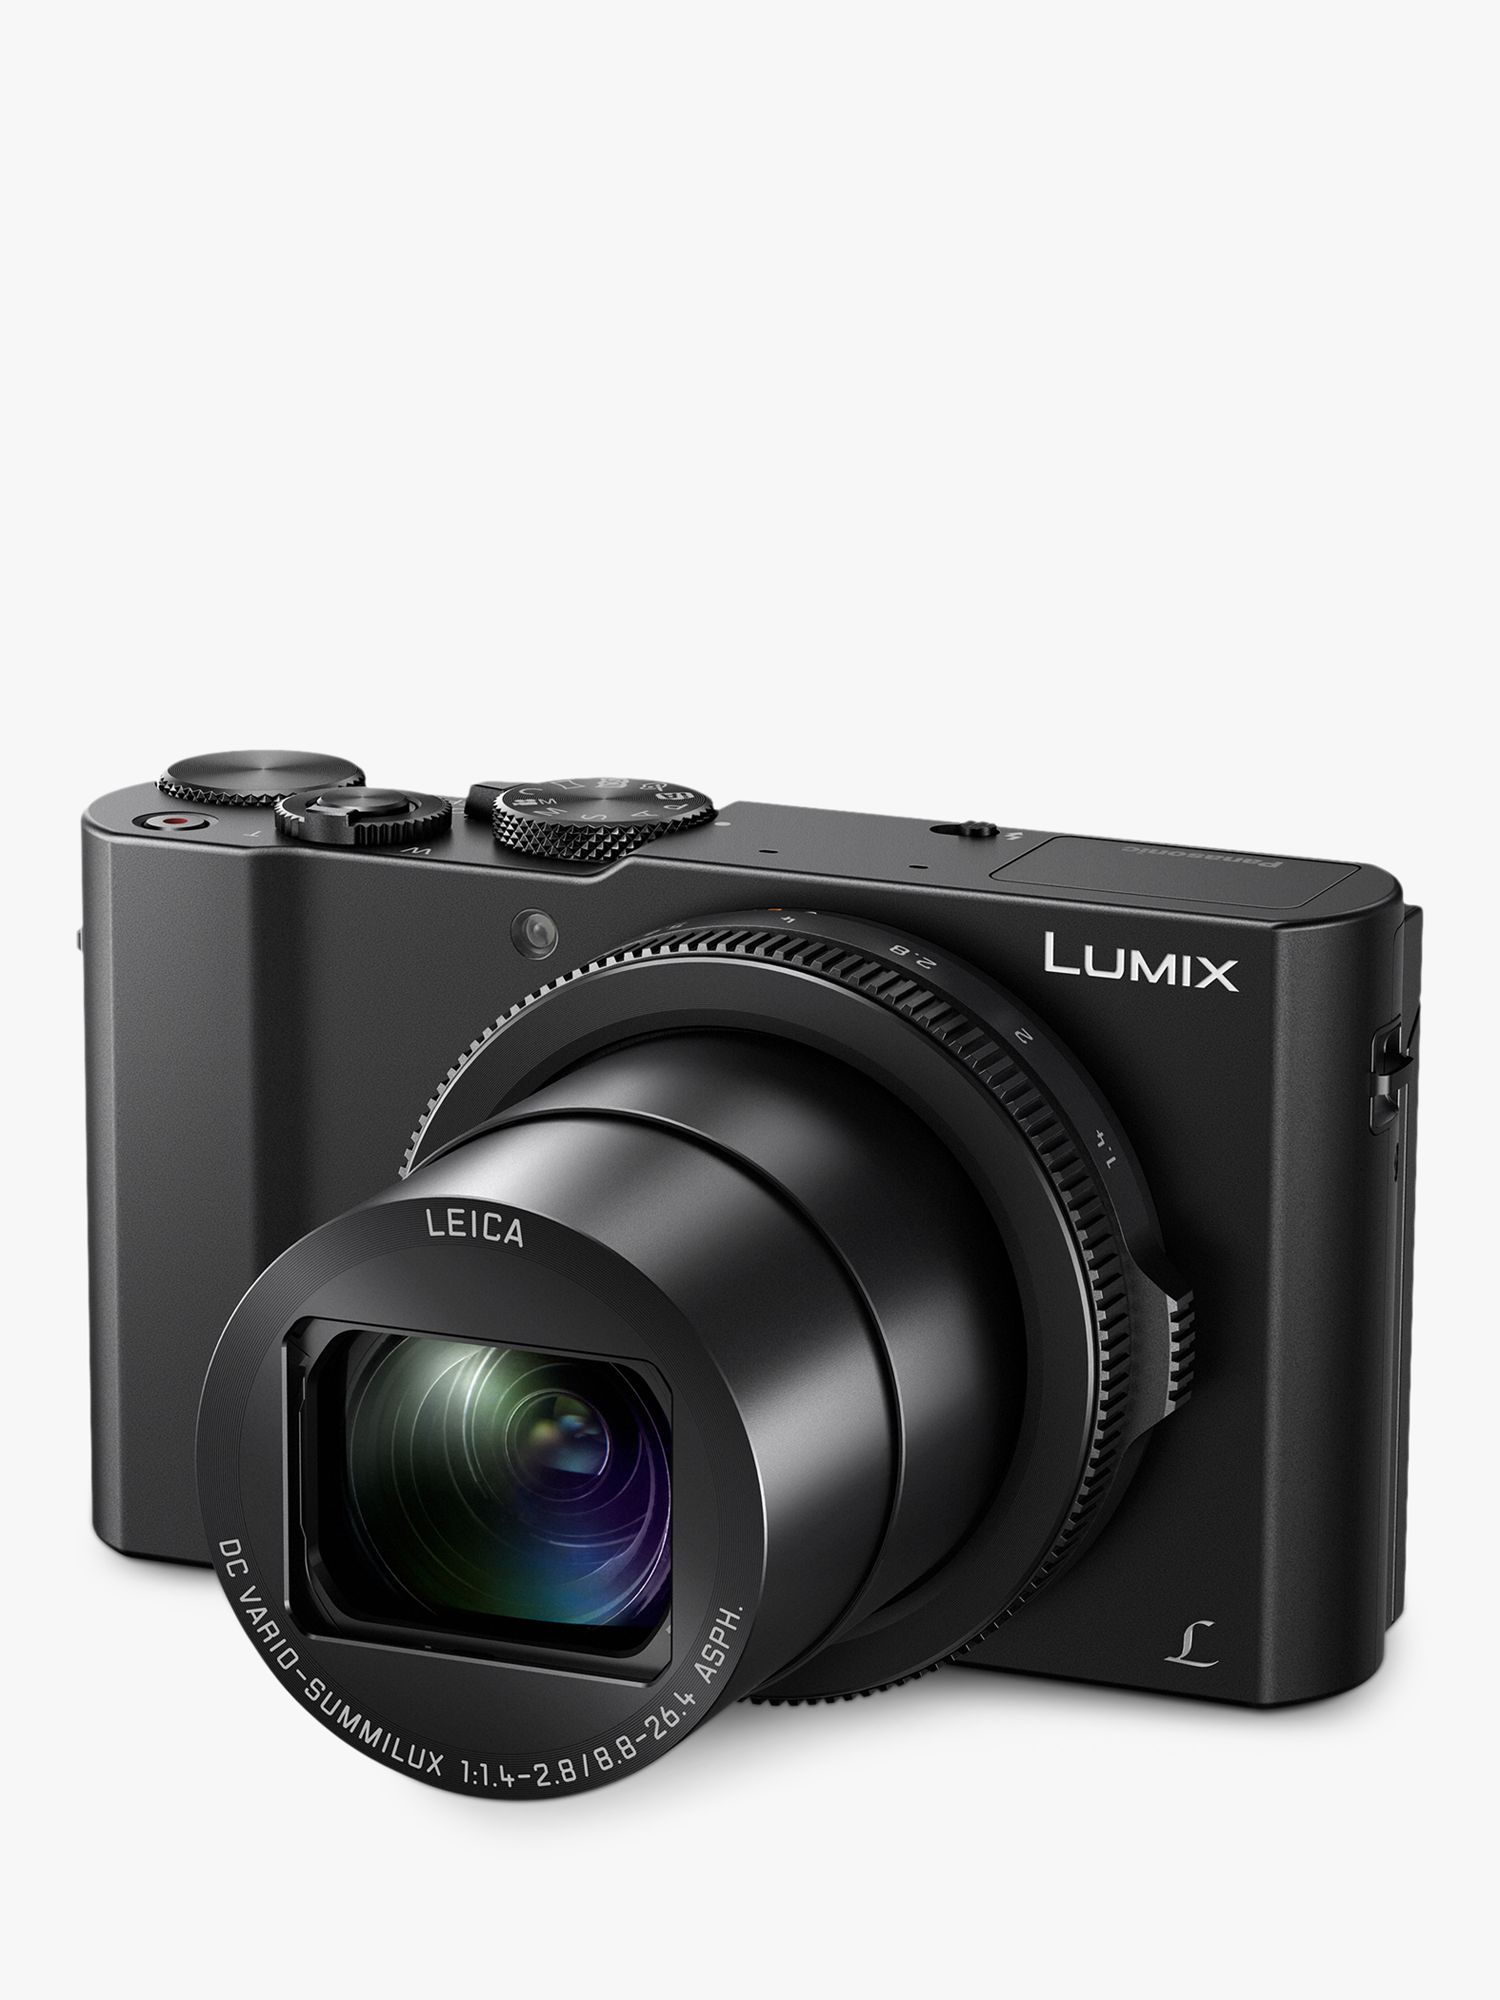 Panasonic Lumix DMC-LX15 4K Ultra HD, 20.1MP, 3x Optical Zoom, 3” LCD